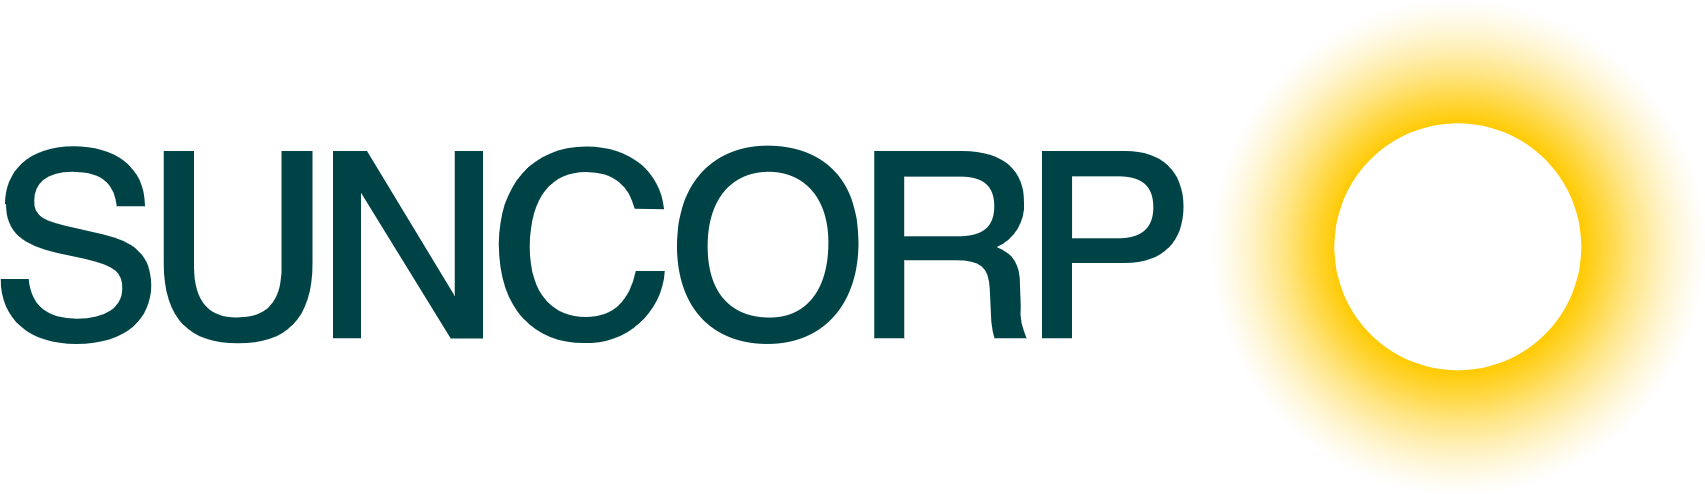 Suncorp logo large (transparent PNG)